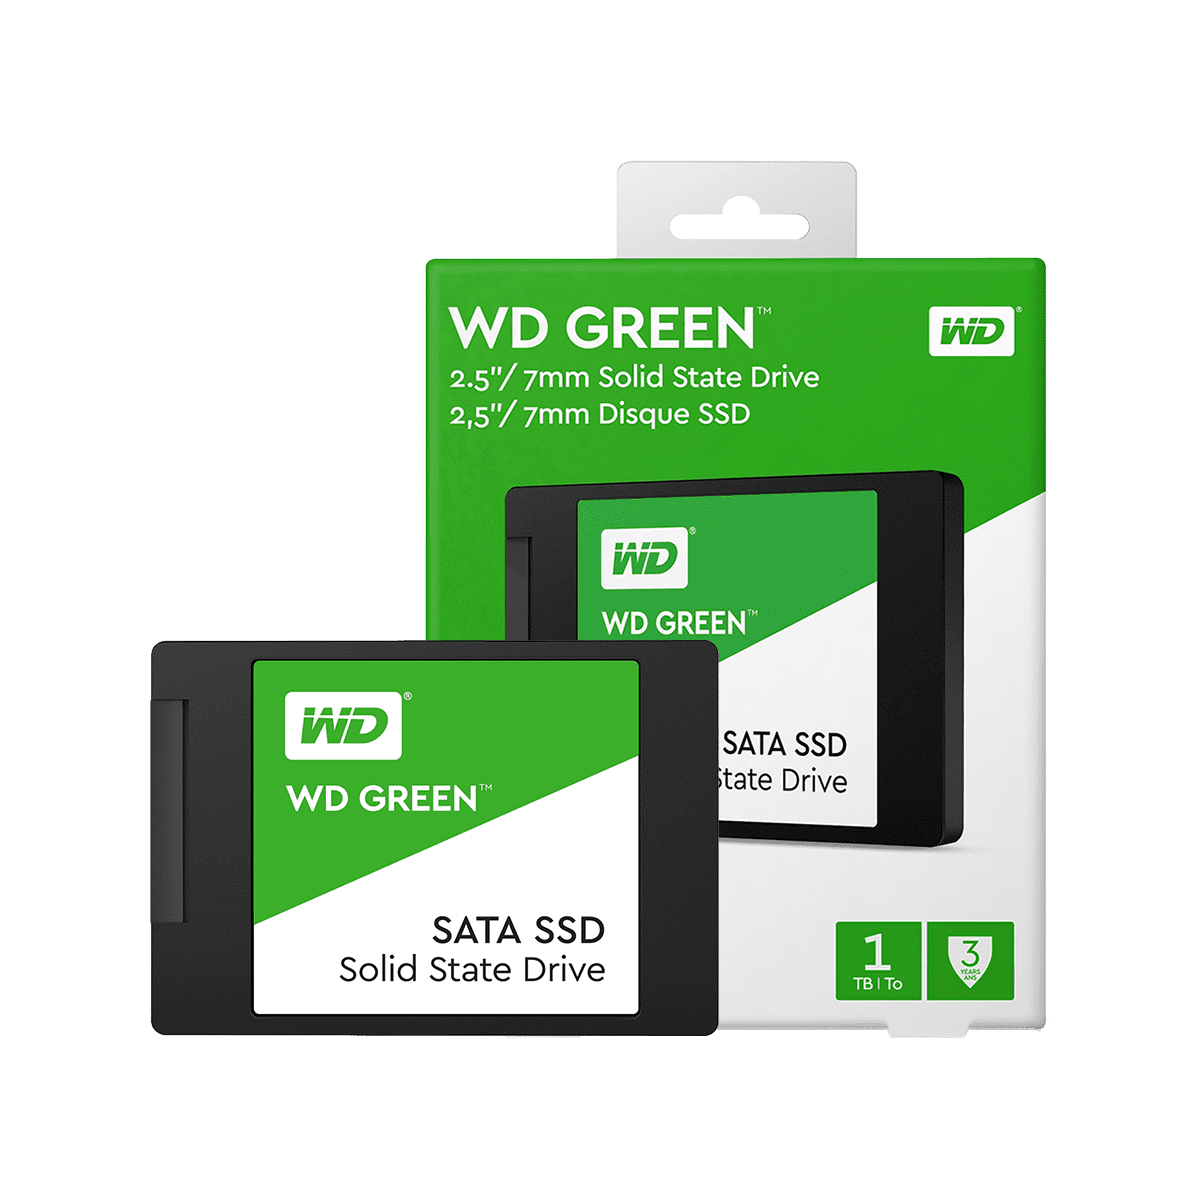 【販売終了】WesternDigital製 WD GREENシリーズ 2.5型 低消費電力SSD (1TB) WDS100T2G0A